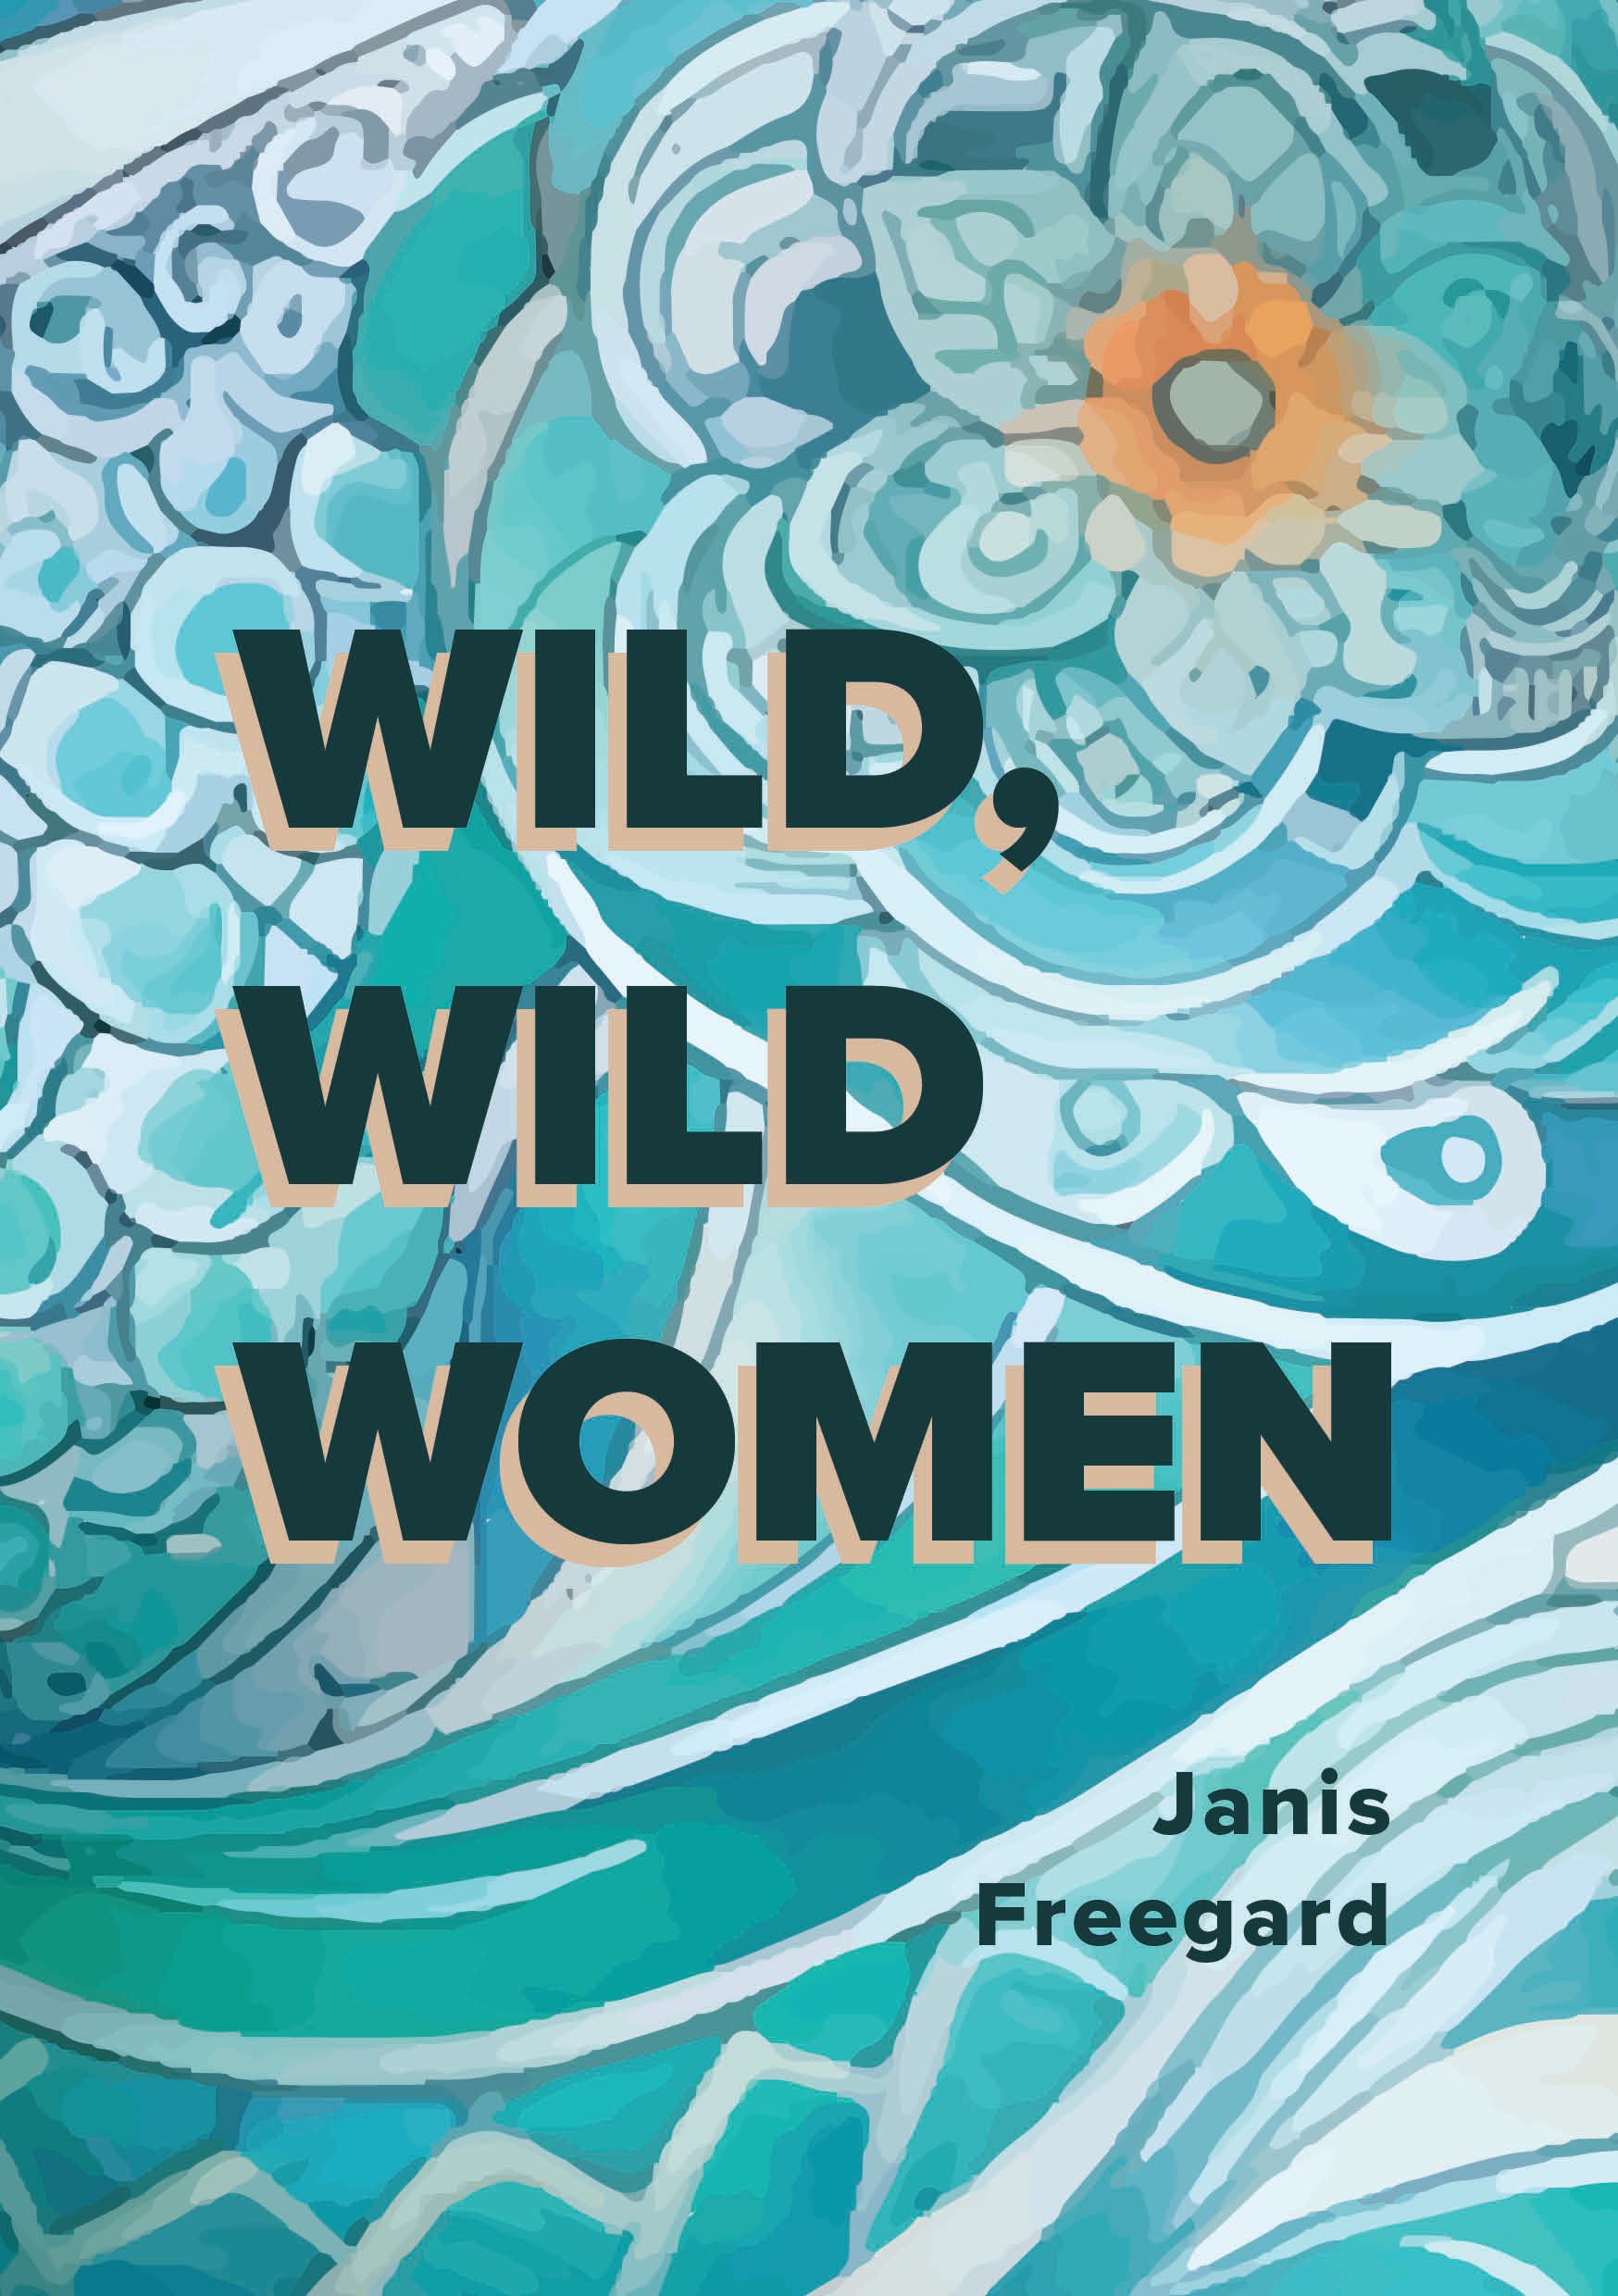 Book Launch: Wild, Wild Women by Janis Freegard